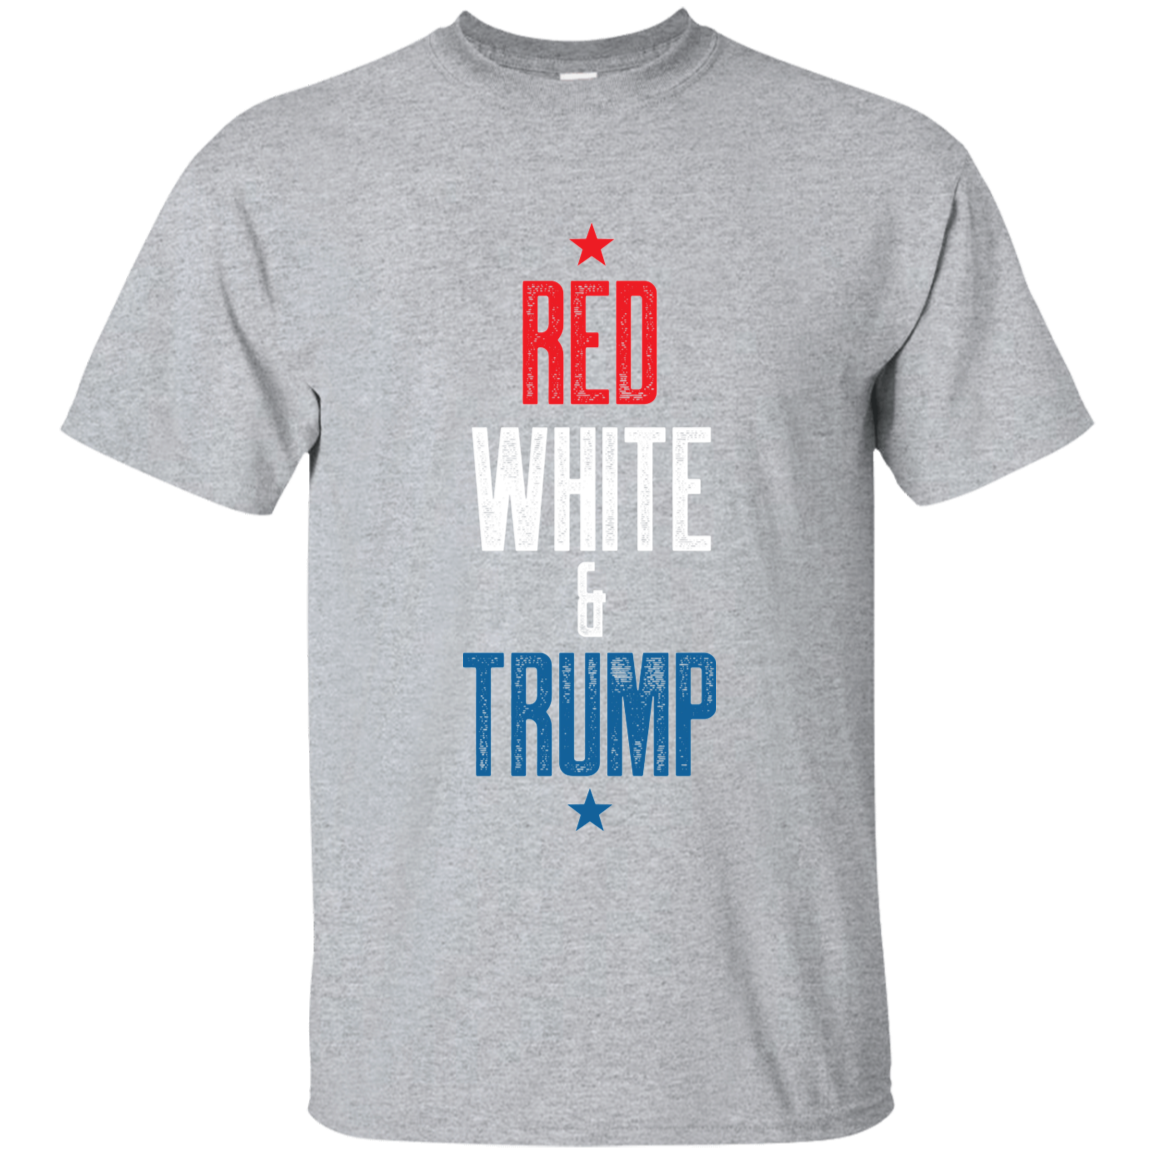 Red White & Trump Tee